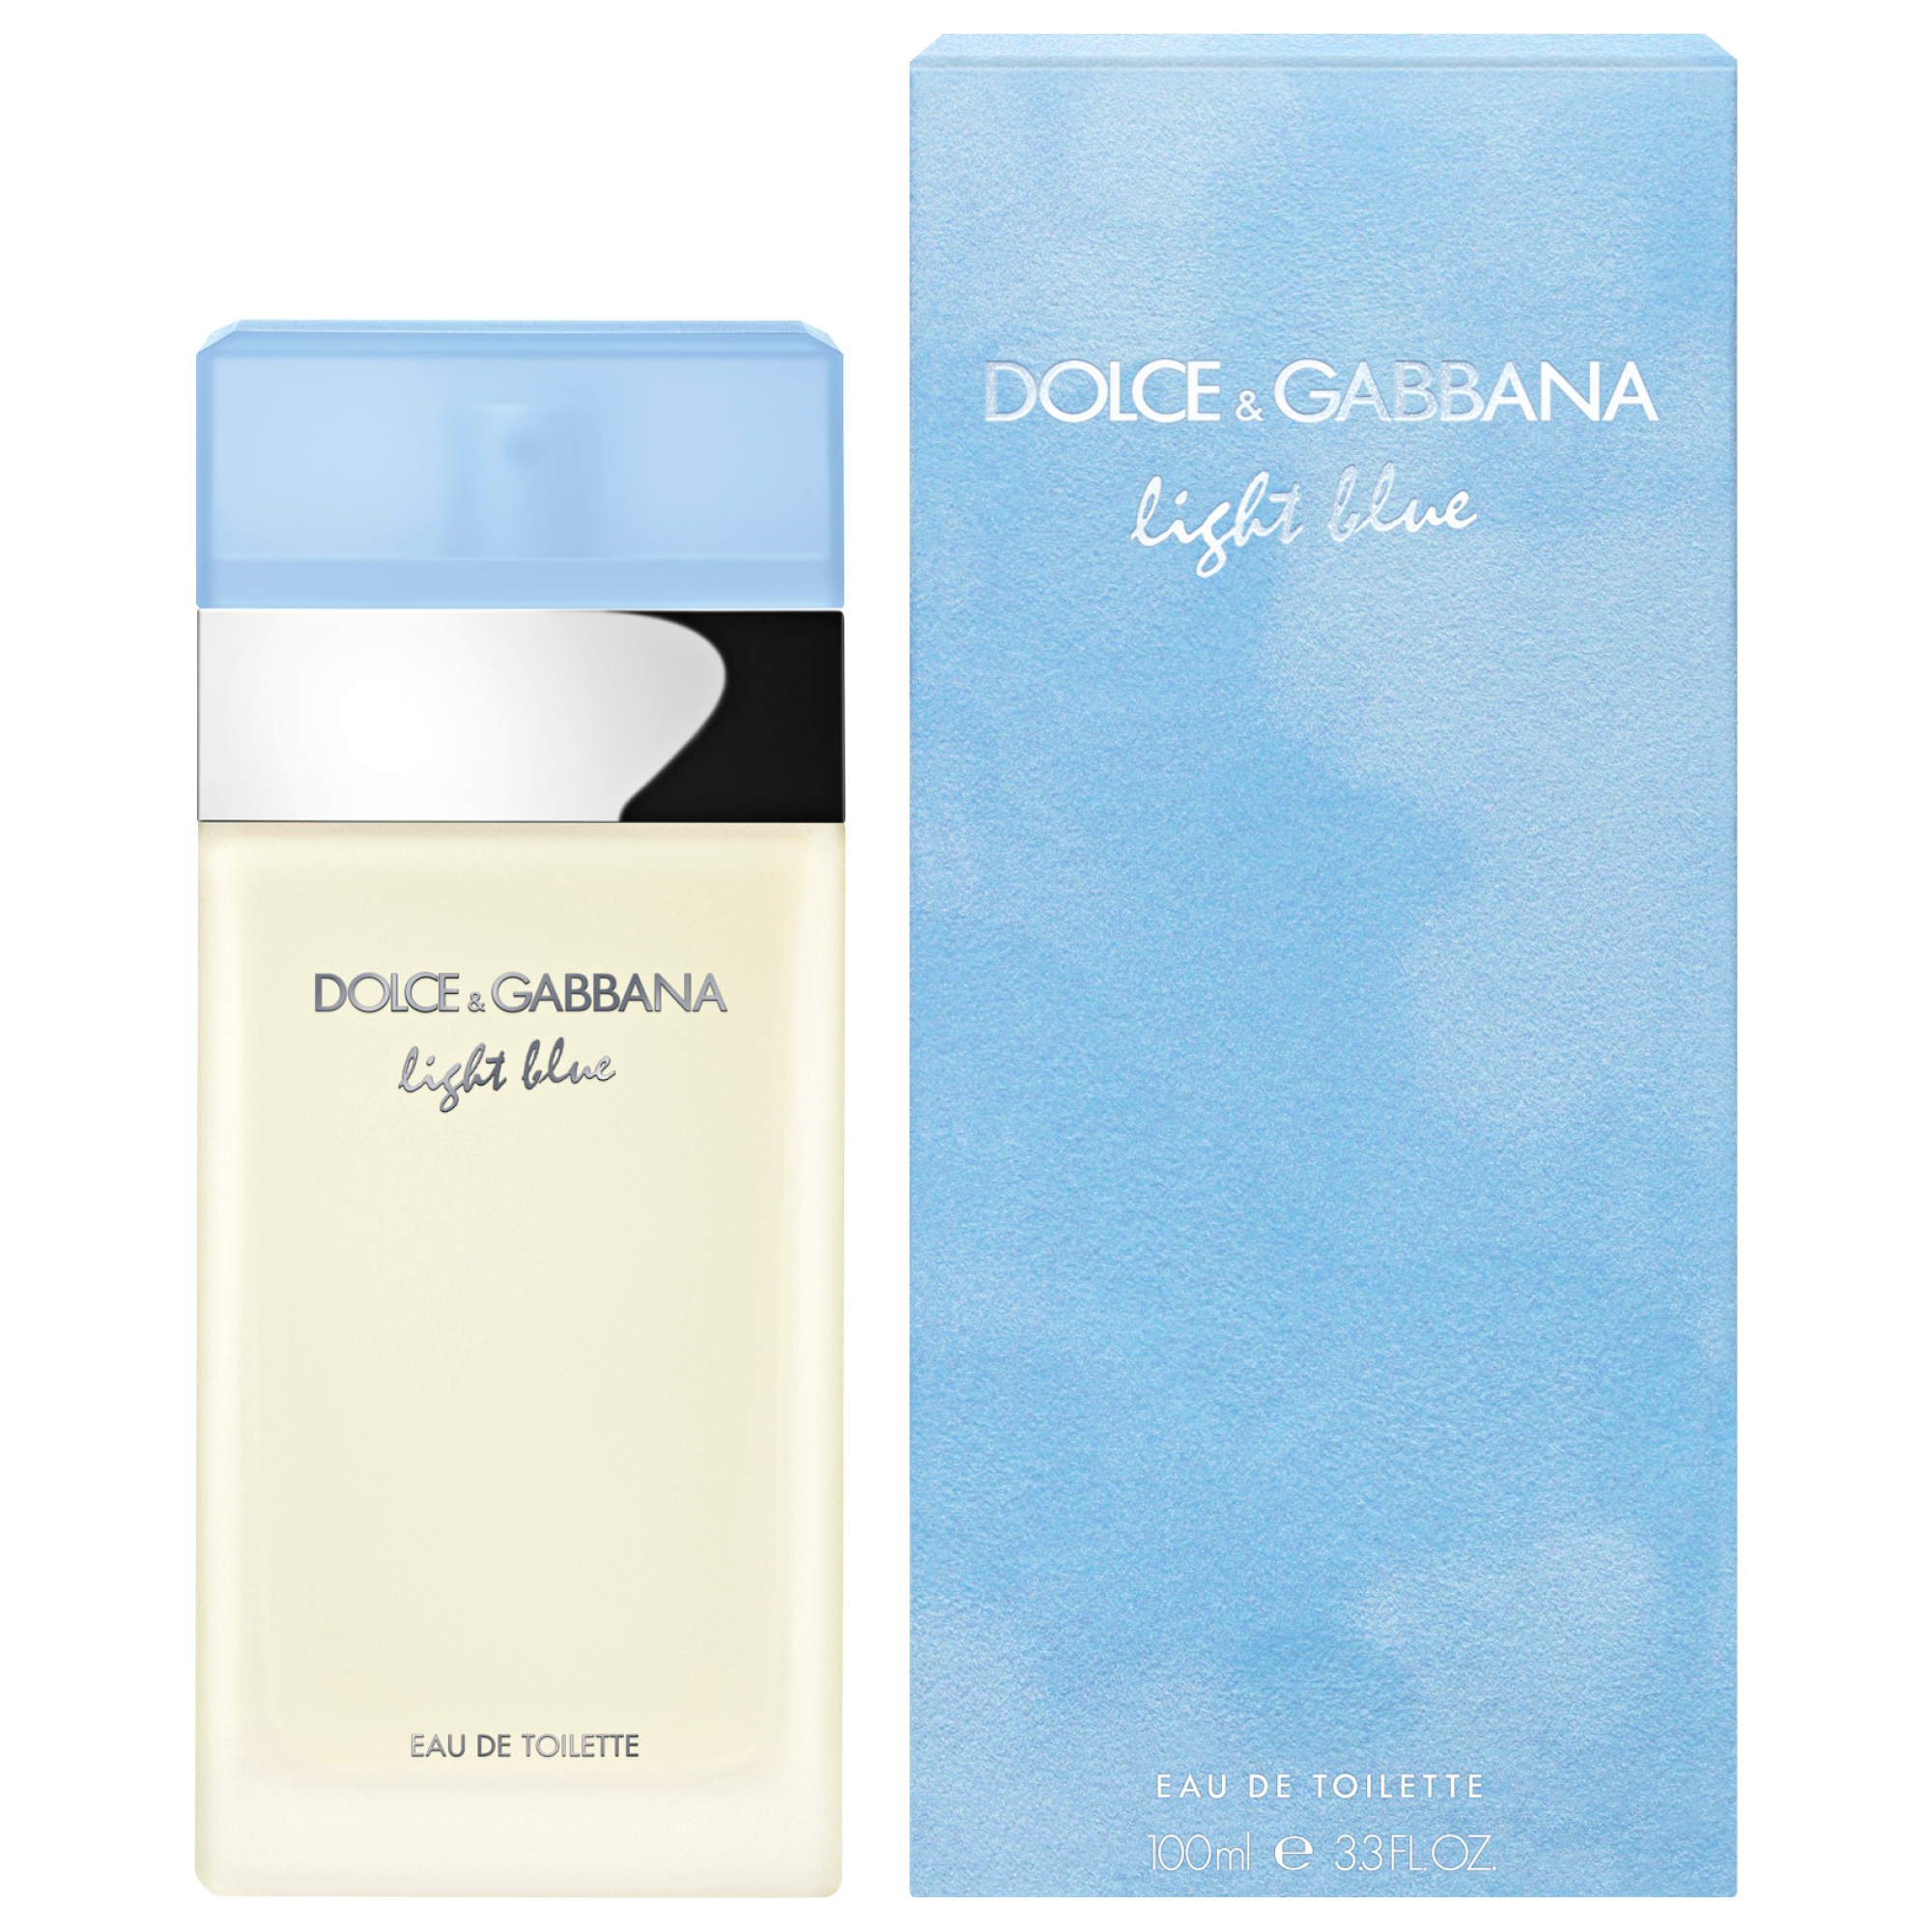 Kollektive Ledelse lade Dolce & Gabbana Light Blue 100ml | Perth Airport Digital Marketplace |  Perth Airport Digital Marketplace